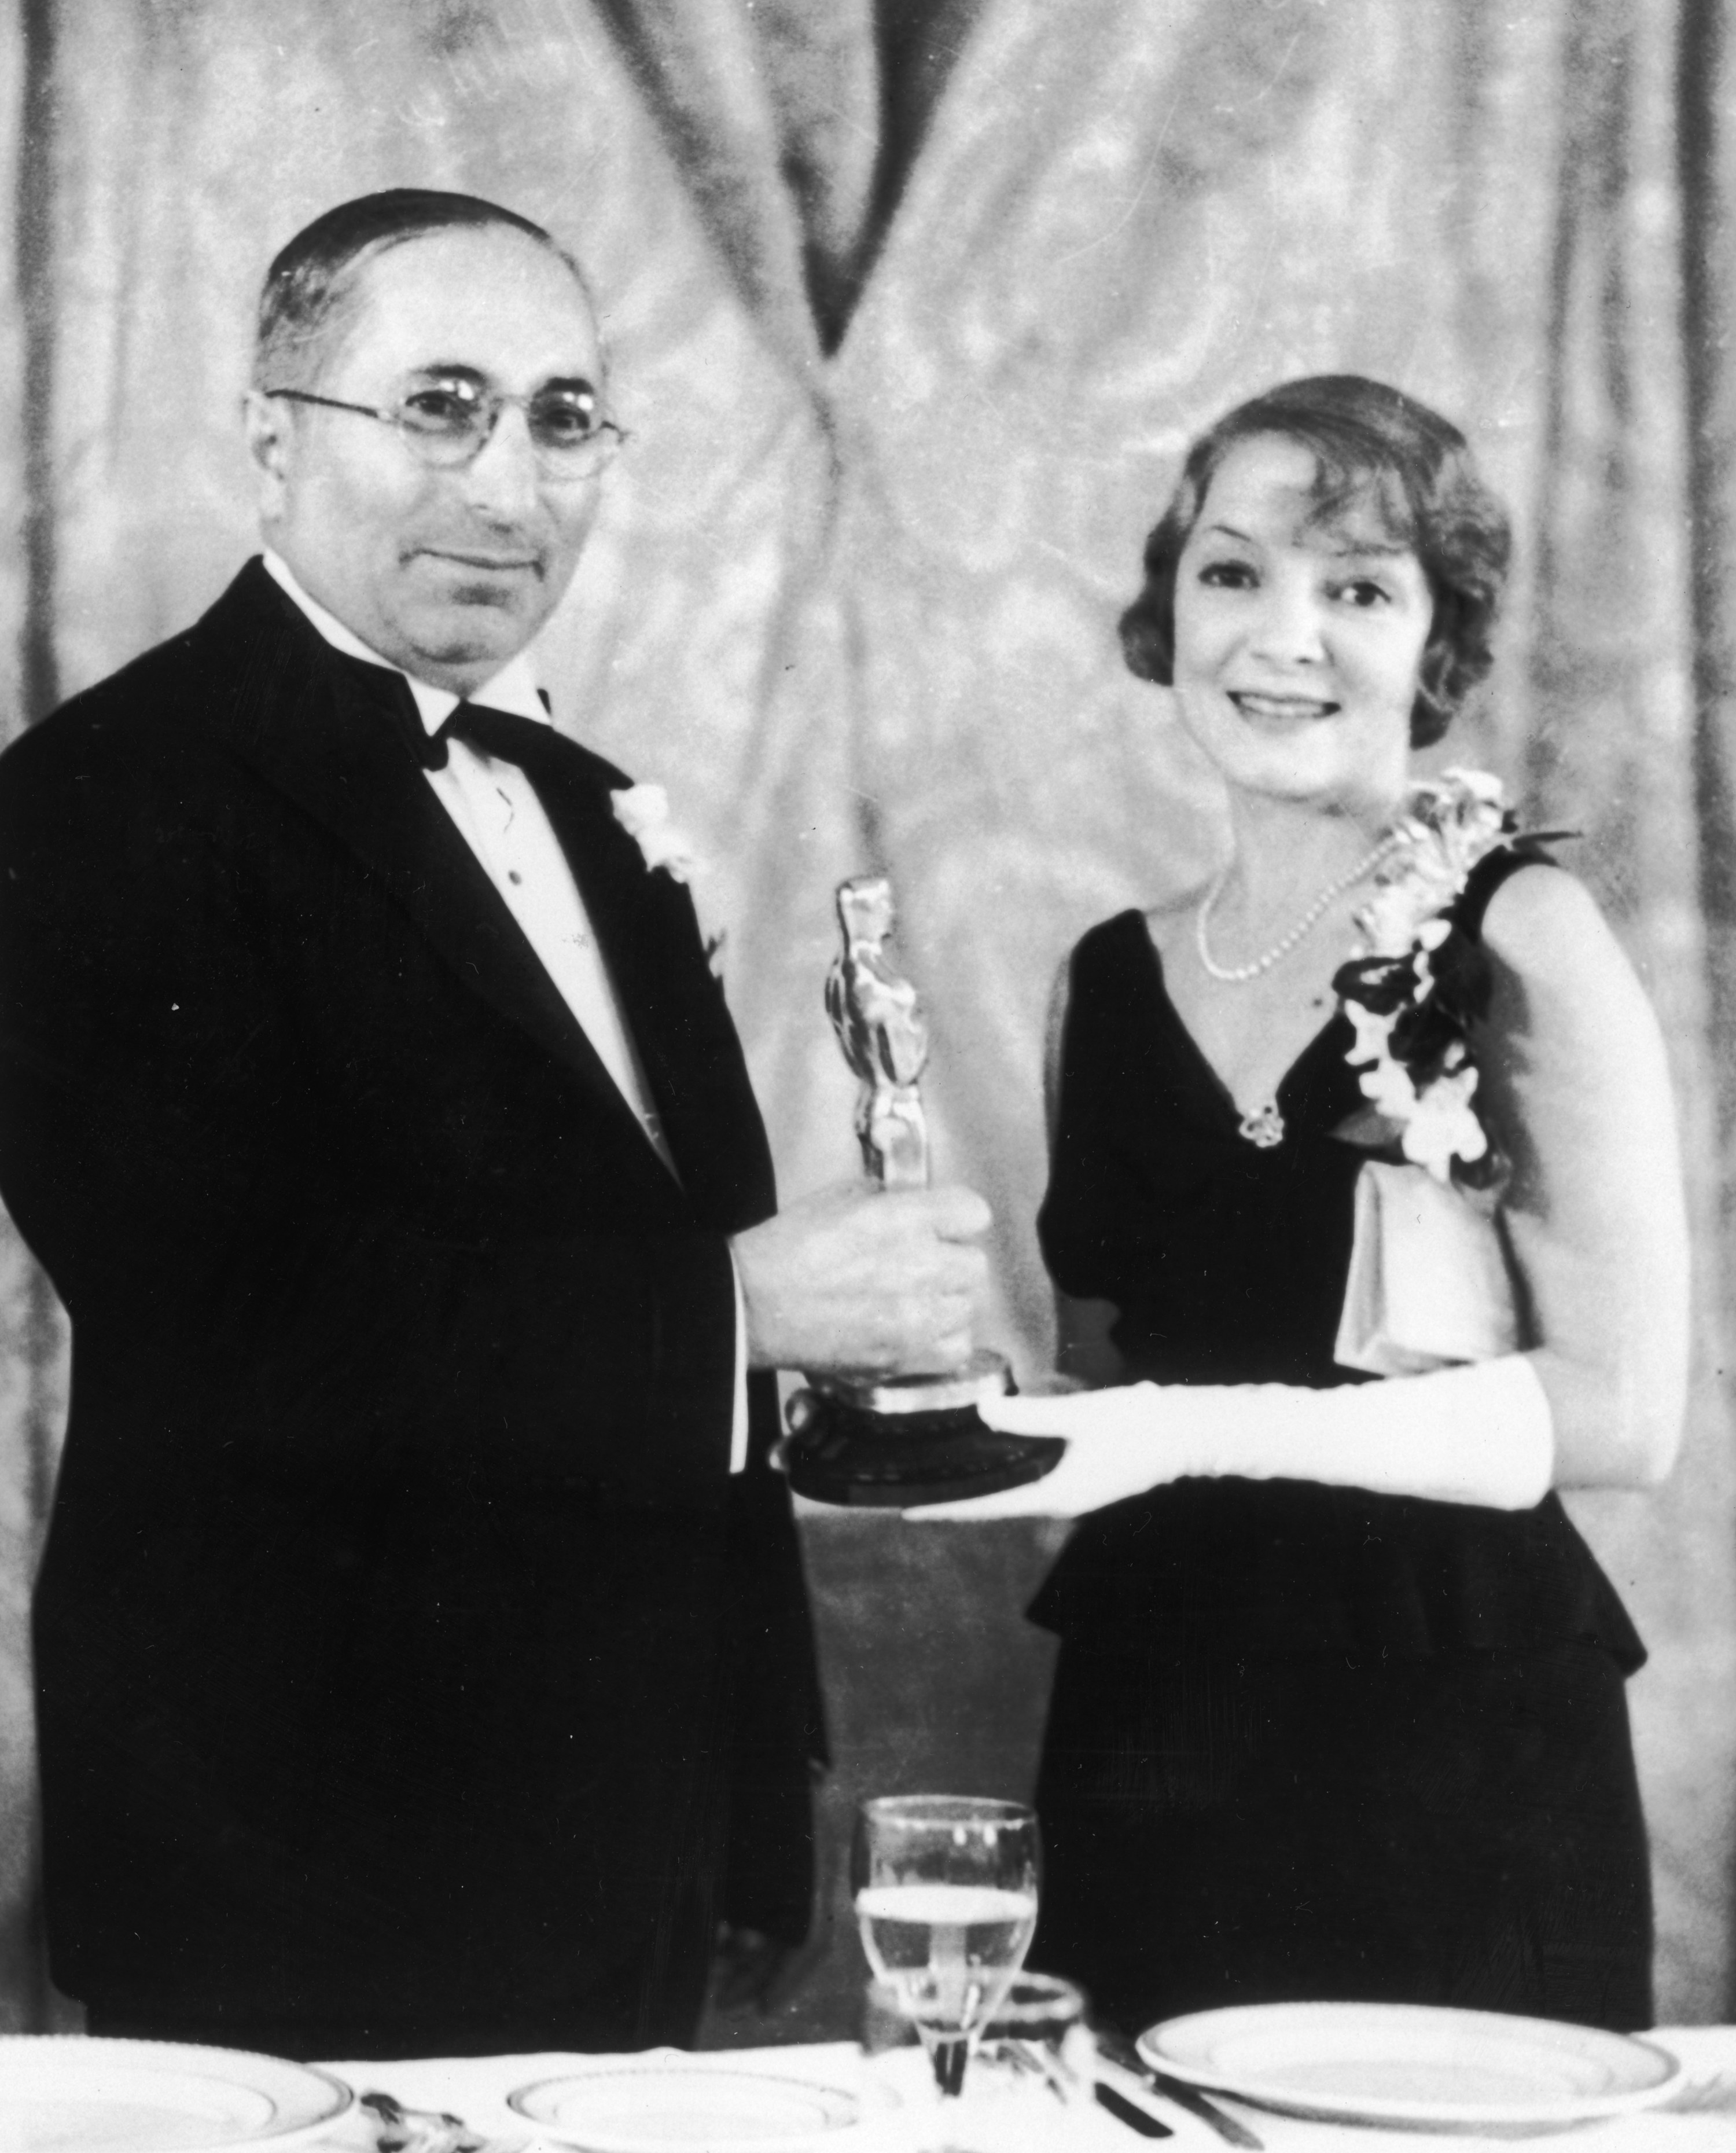 Louis B梅耶提出美国演员海伦海耶斯的奥斯卡最佳女演员她在影片中的角色& # x27;的罪Madelon Claudet& # x27;